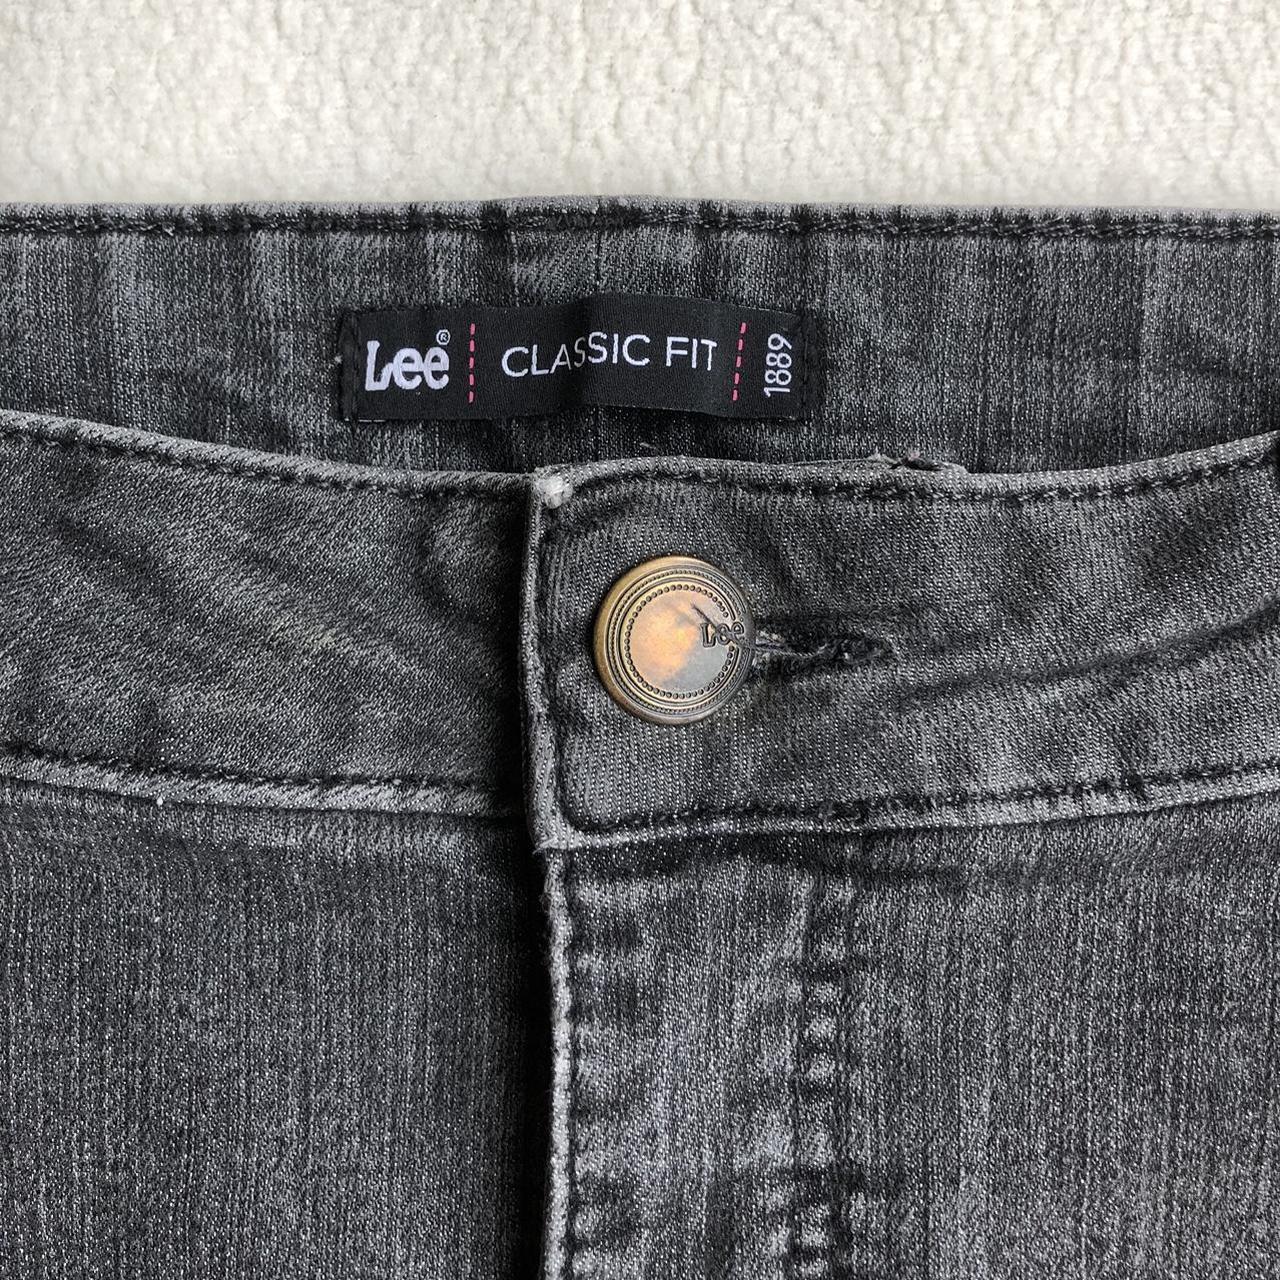 Ref: 320. Lee Classic Fit Jeans Size W36”... - Depop